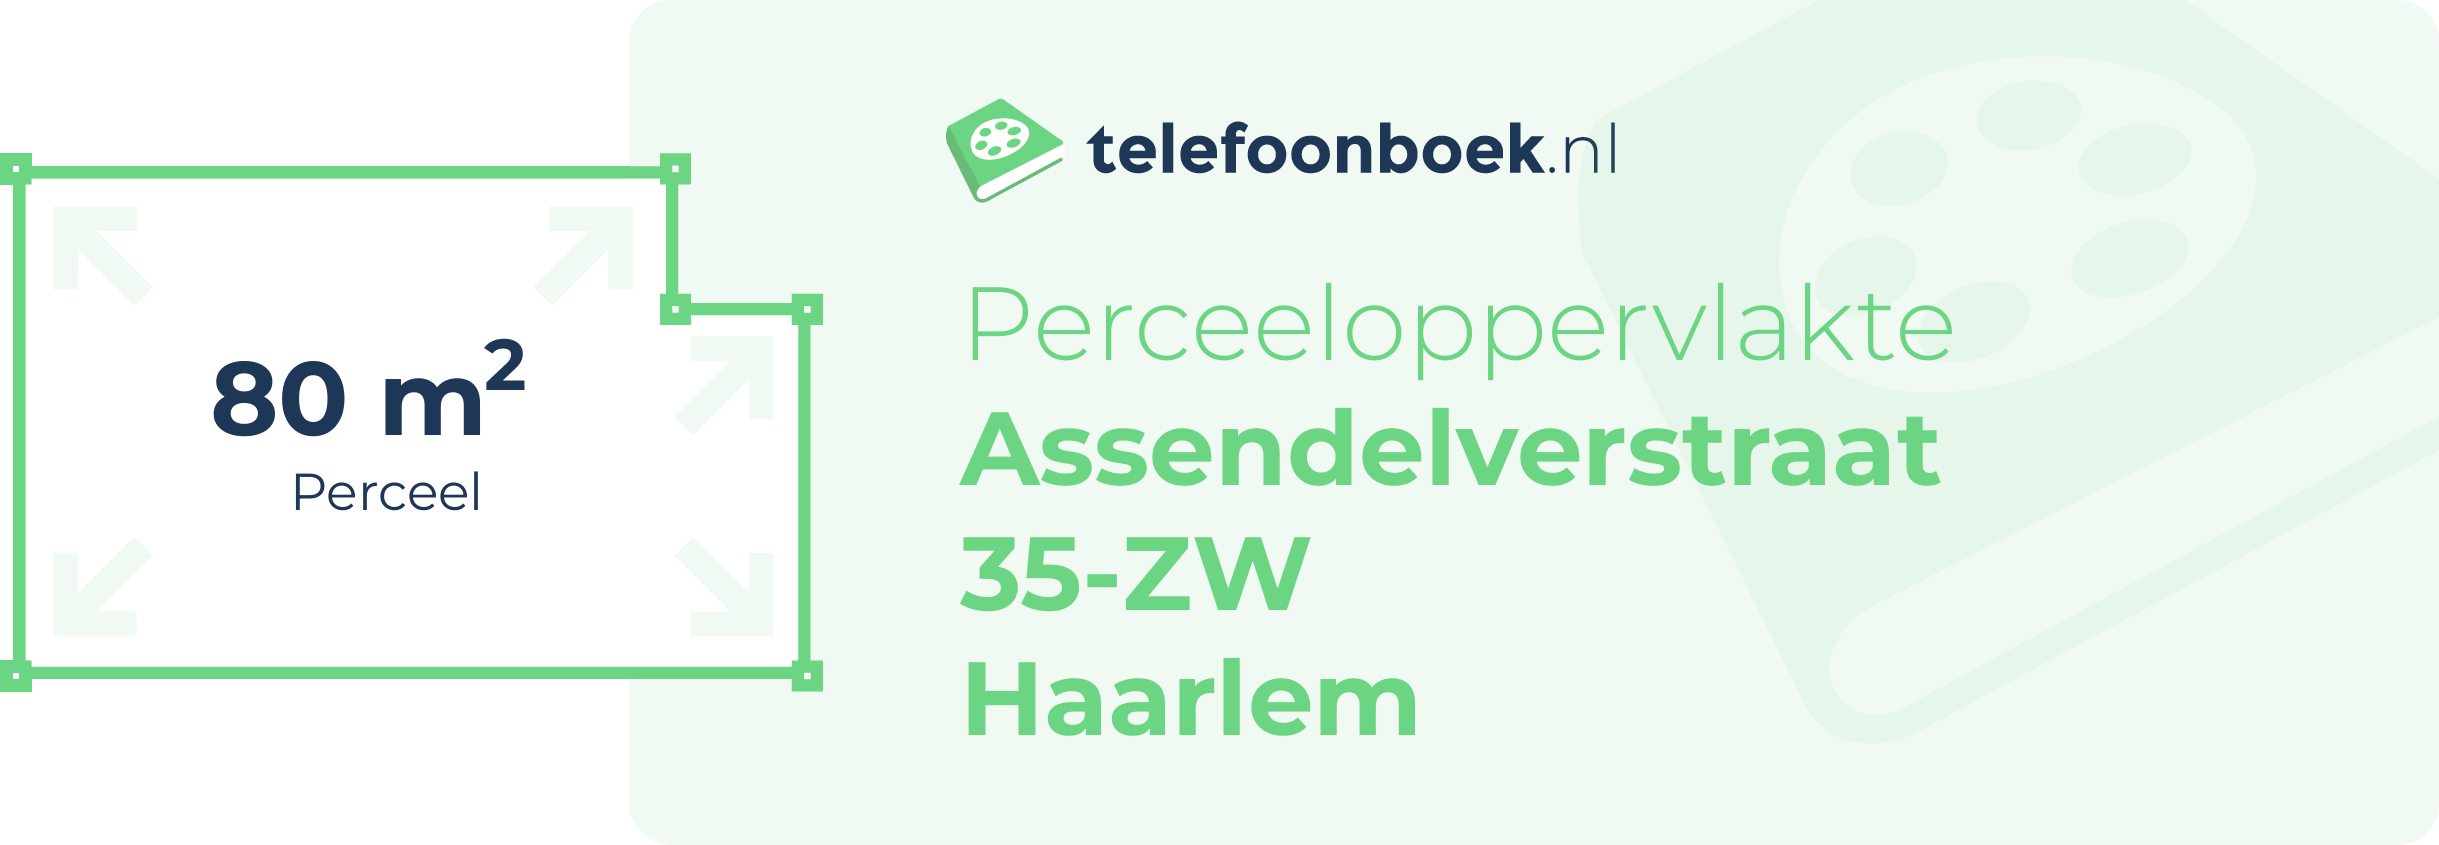 Perceeloppervlakte Assendelverstraat 35-ZW Haarlem